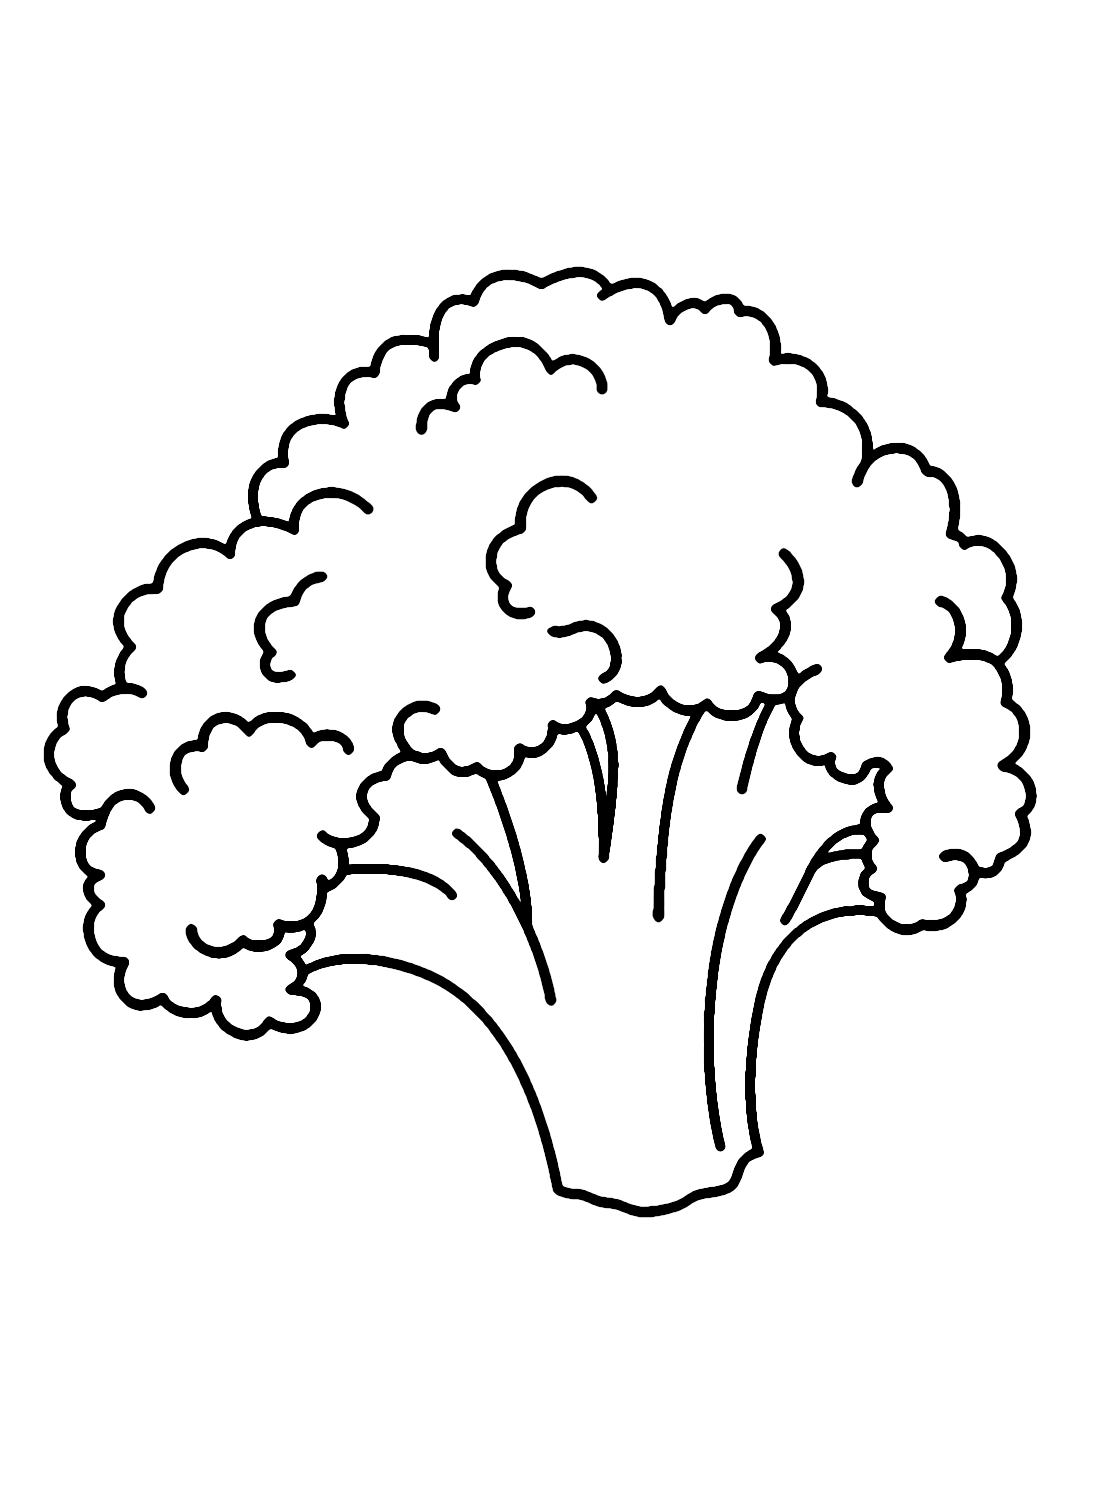 Broccoli vegetali di broccoli